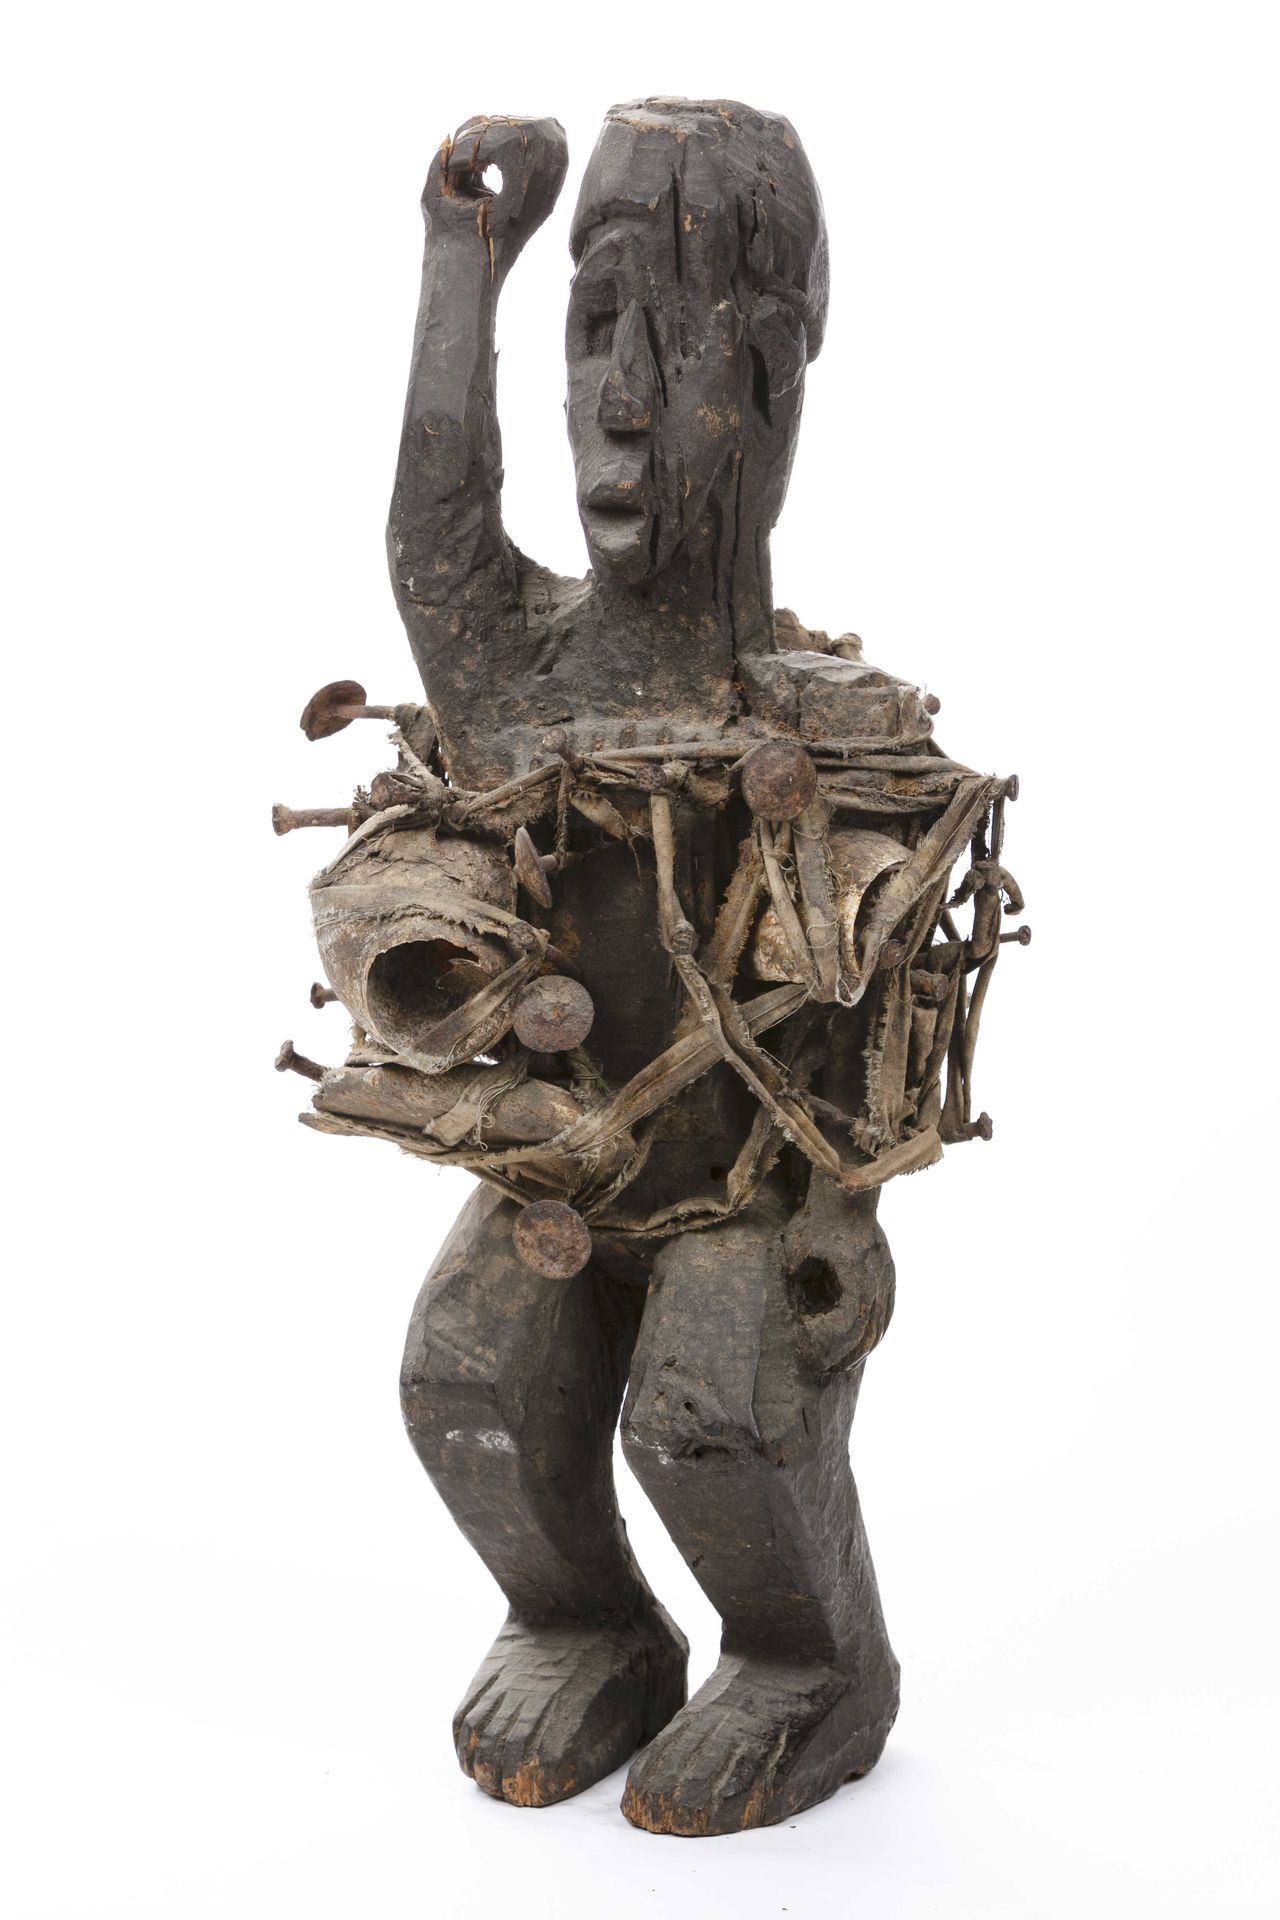 Null 金刚族人在Nkisi风格中的形象
刚果民主共和国
木材、织物、钉子、金属
高：42厘米 
角色的面部特征被抹去，小方嘴张开，似乎有一个头饰。抬起的手可&hellip;